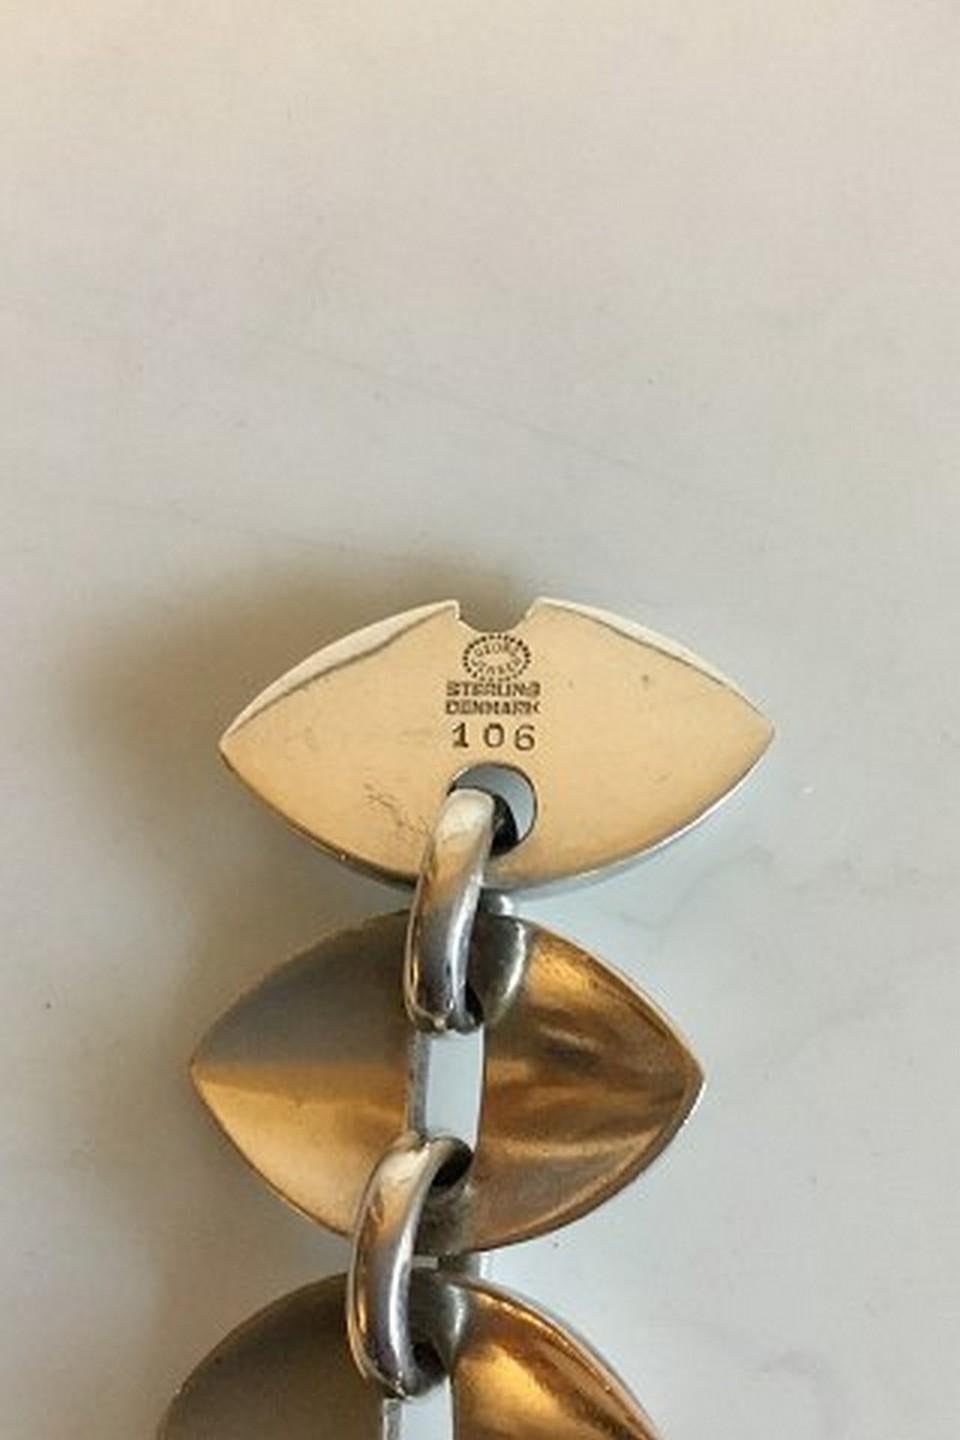 Georg Jensen Sterling Silver Bracelet No 106. Designed by Nanna Ditzel approx. 1954. Measures 17.5 cm / 6 57/64 in. Weighs 66.2 g / 2.33 oz.